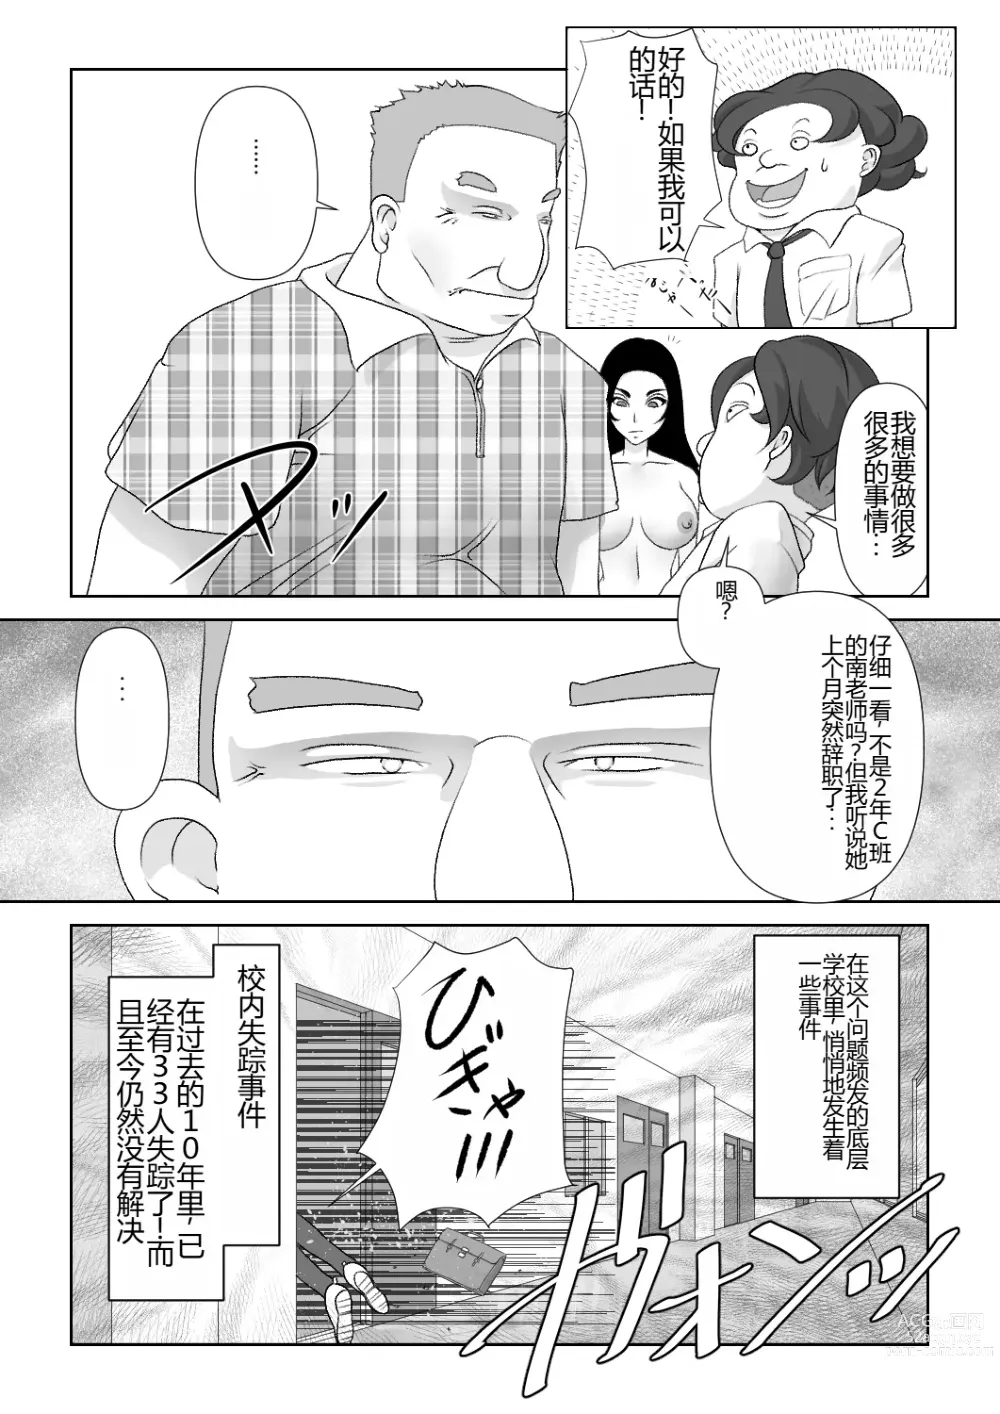 Page 8 of doujinshi Strange School